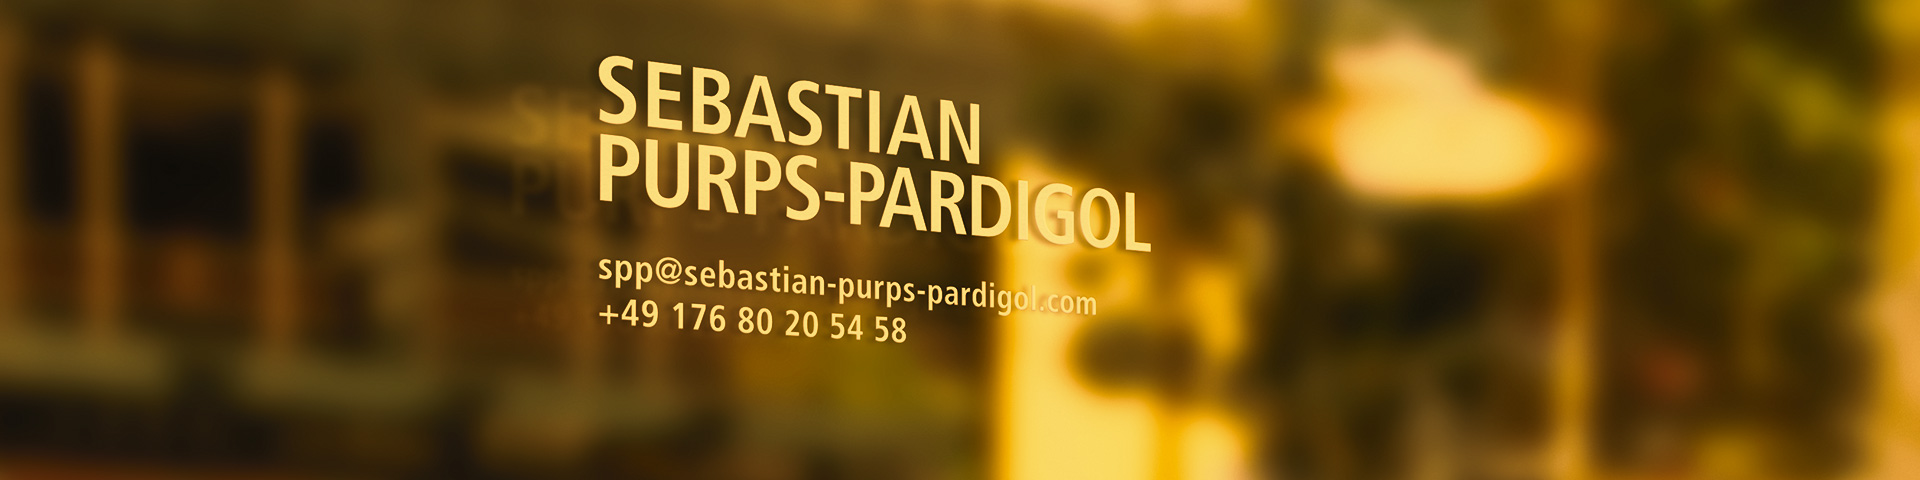 Sebastian Purps-Pardigol